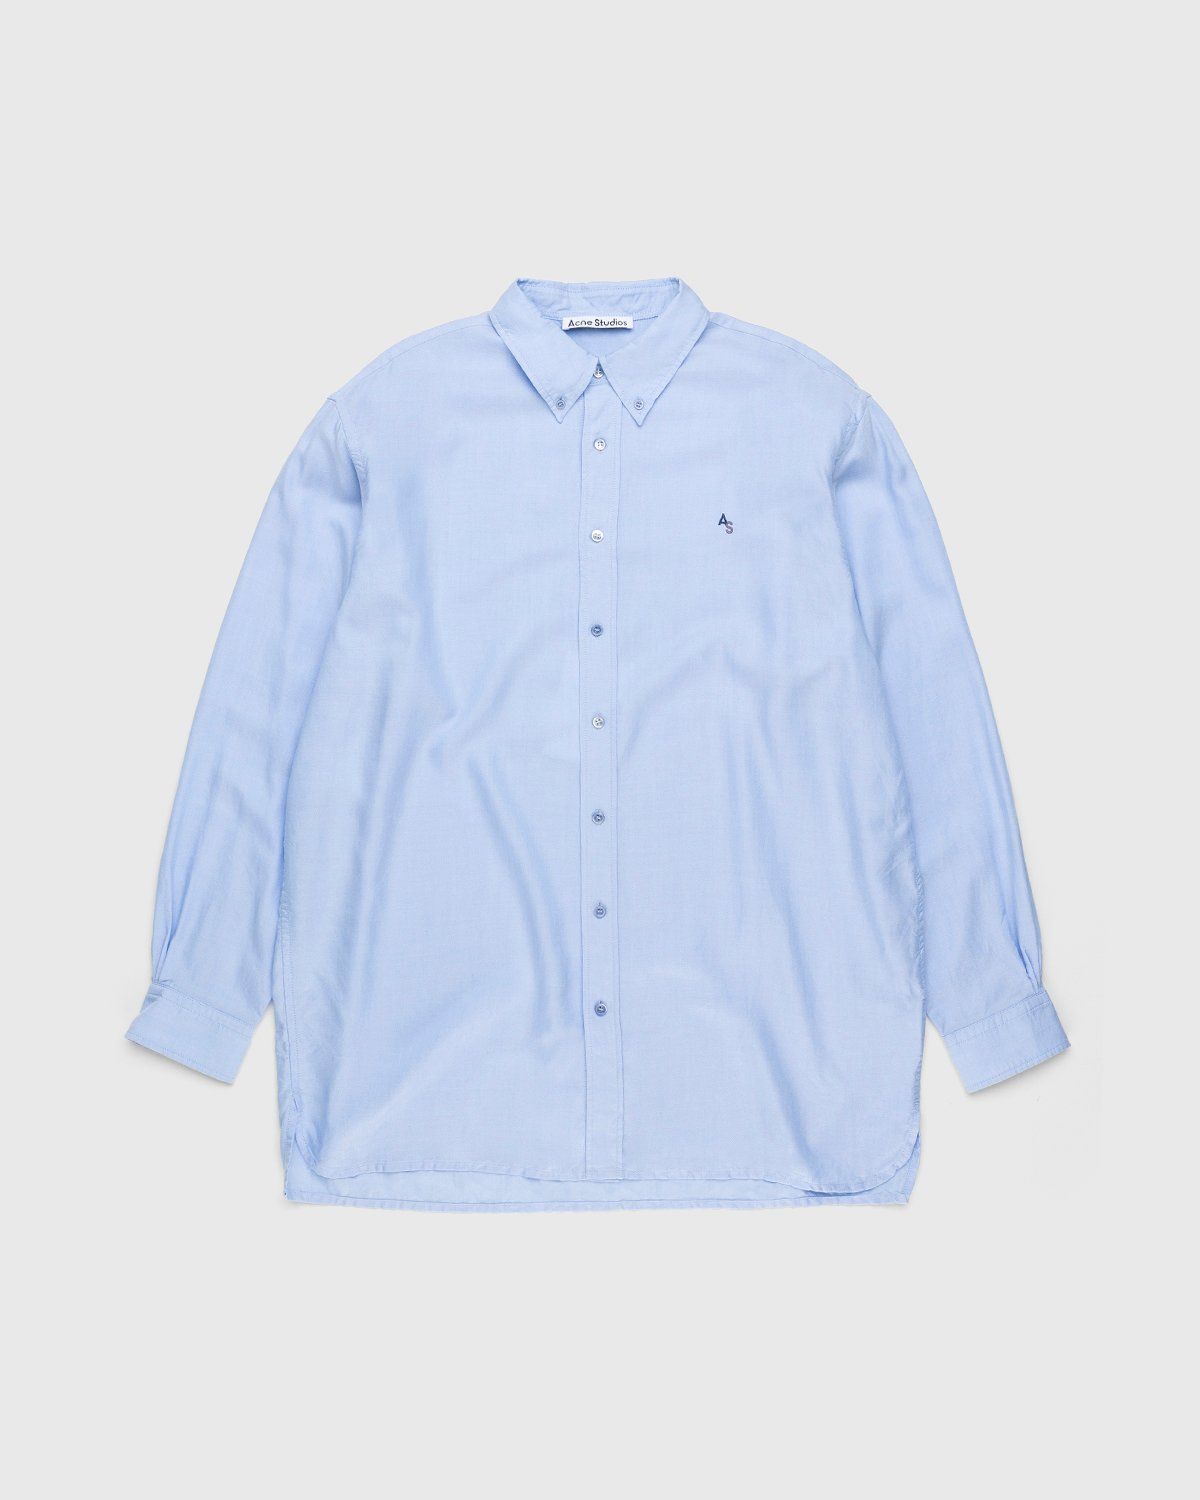 Acne Studios – Classic Monogram Button-Up Shirt Light Blue - Image 1